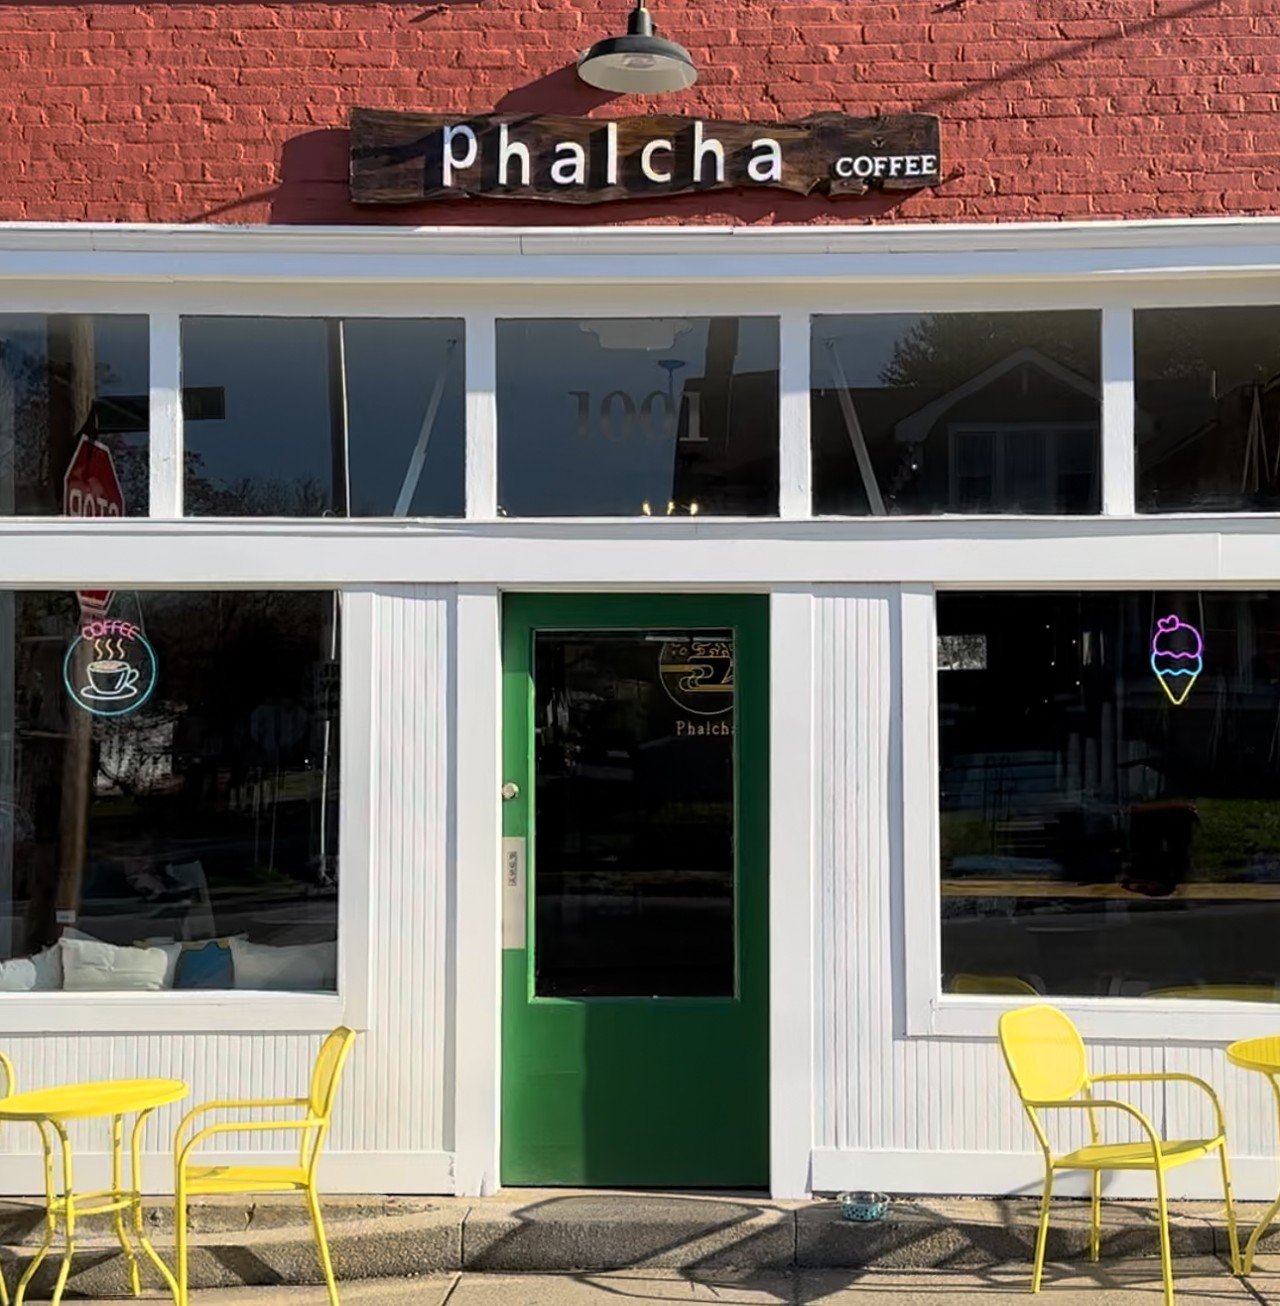 Phalcha Coffee is located on Mary Street.